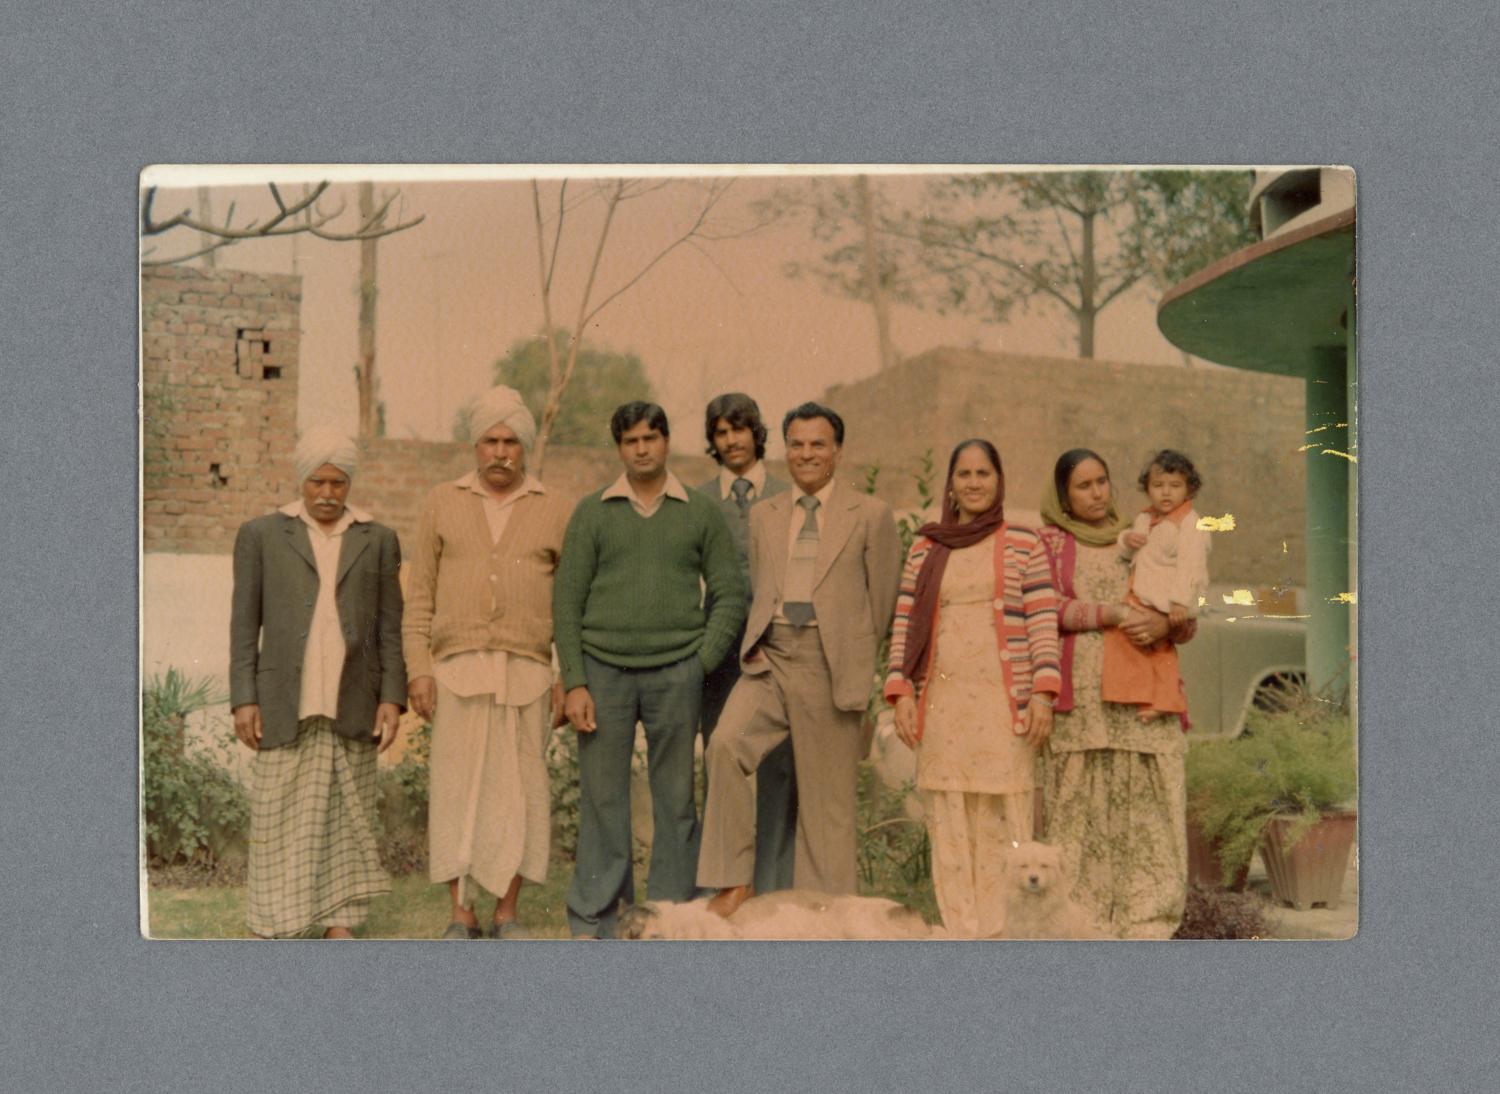 Punjab, India c.1978